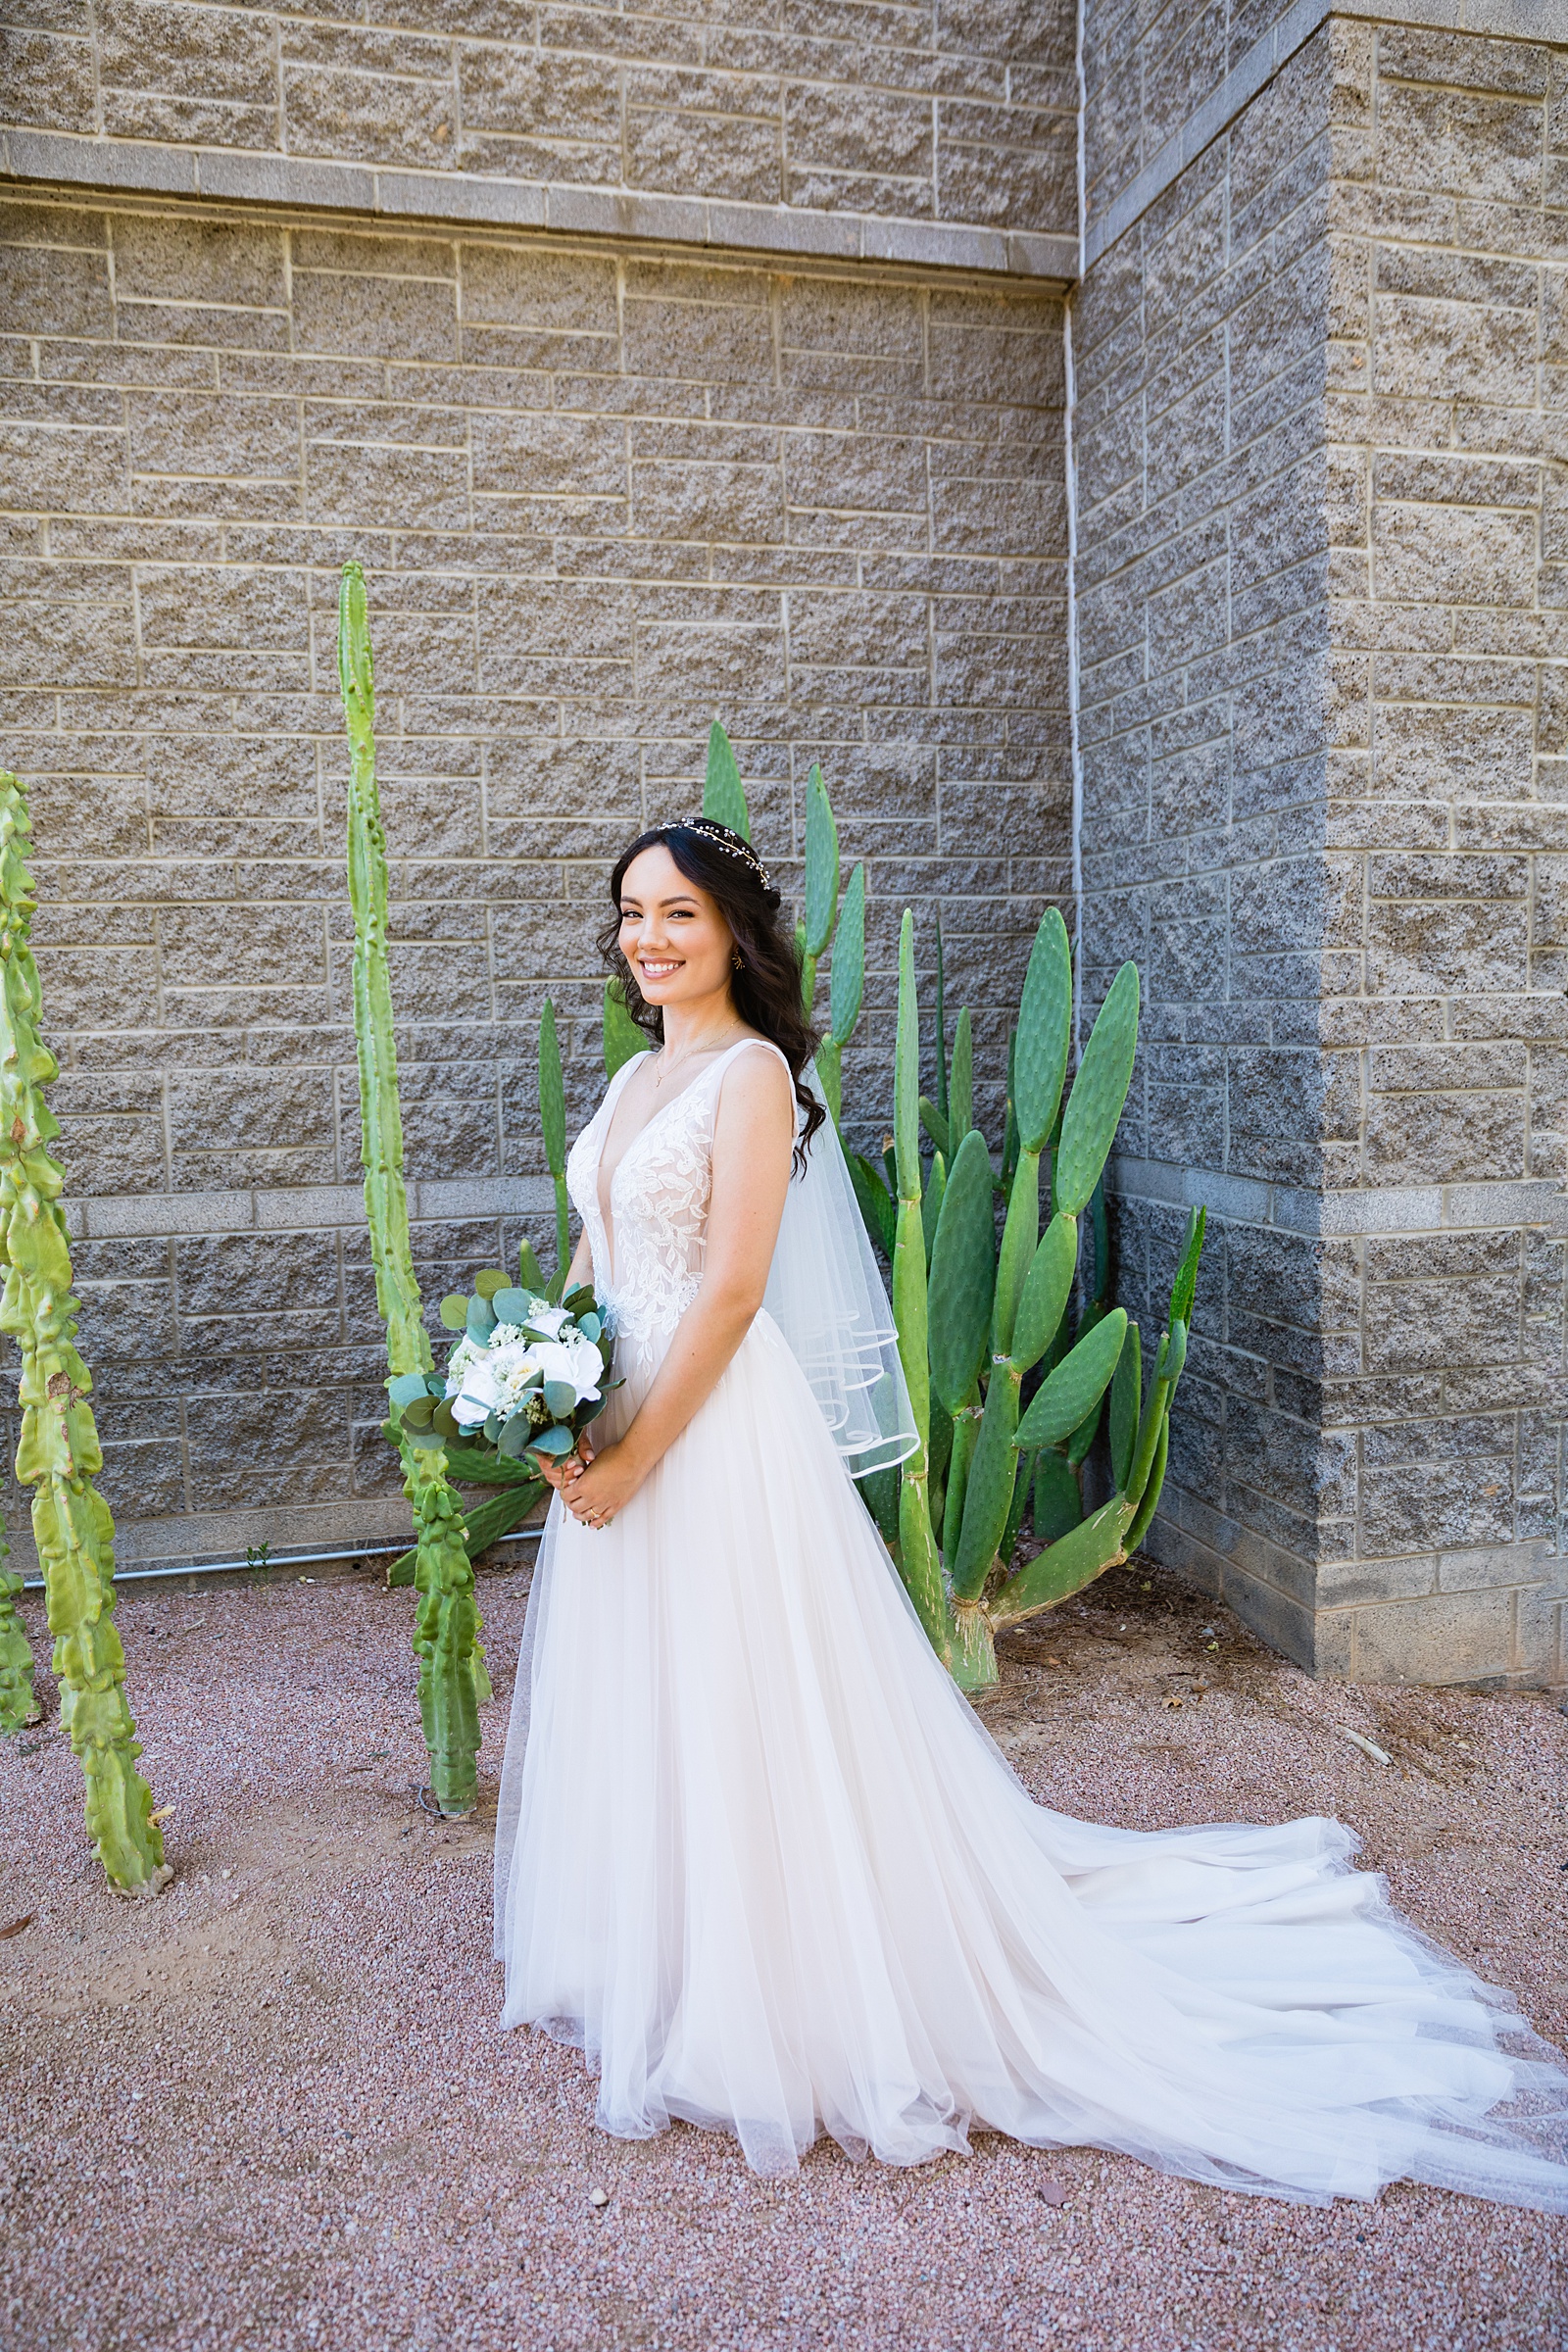 Bride's romantic lace wedding dress for her Hyatt Regency Scottsdale Resort & Spa At Gainey Ranch wedding by PMA Photography.